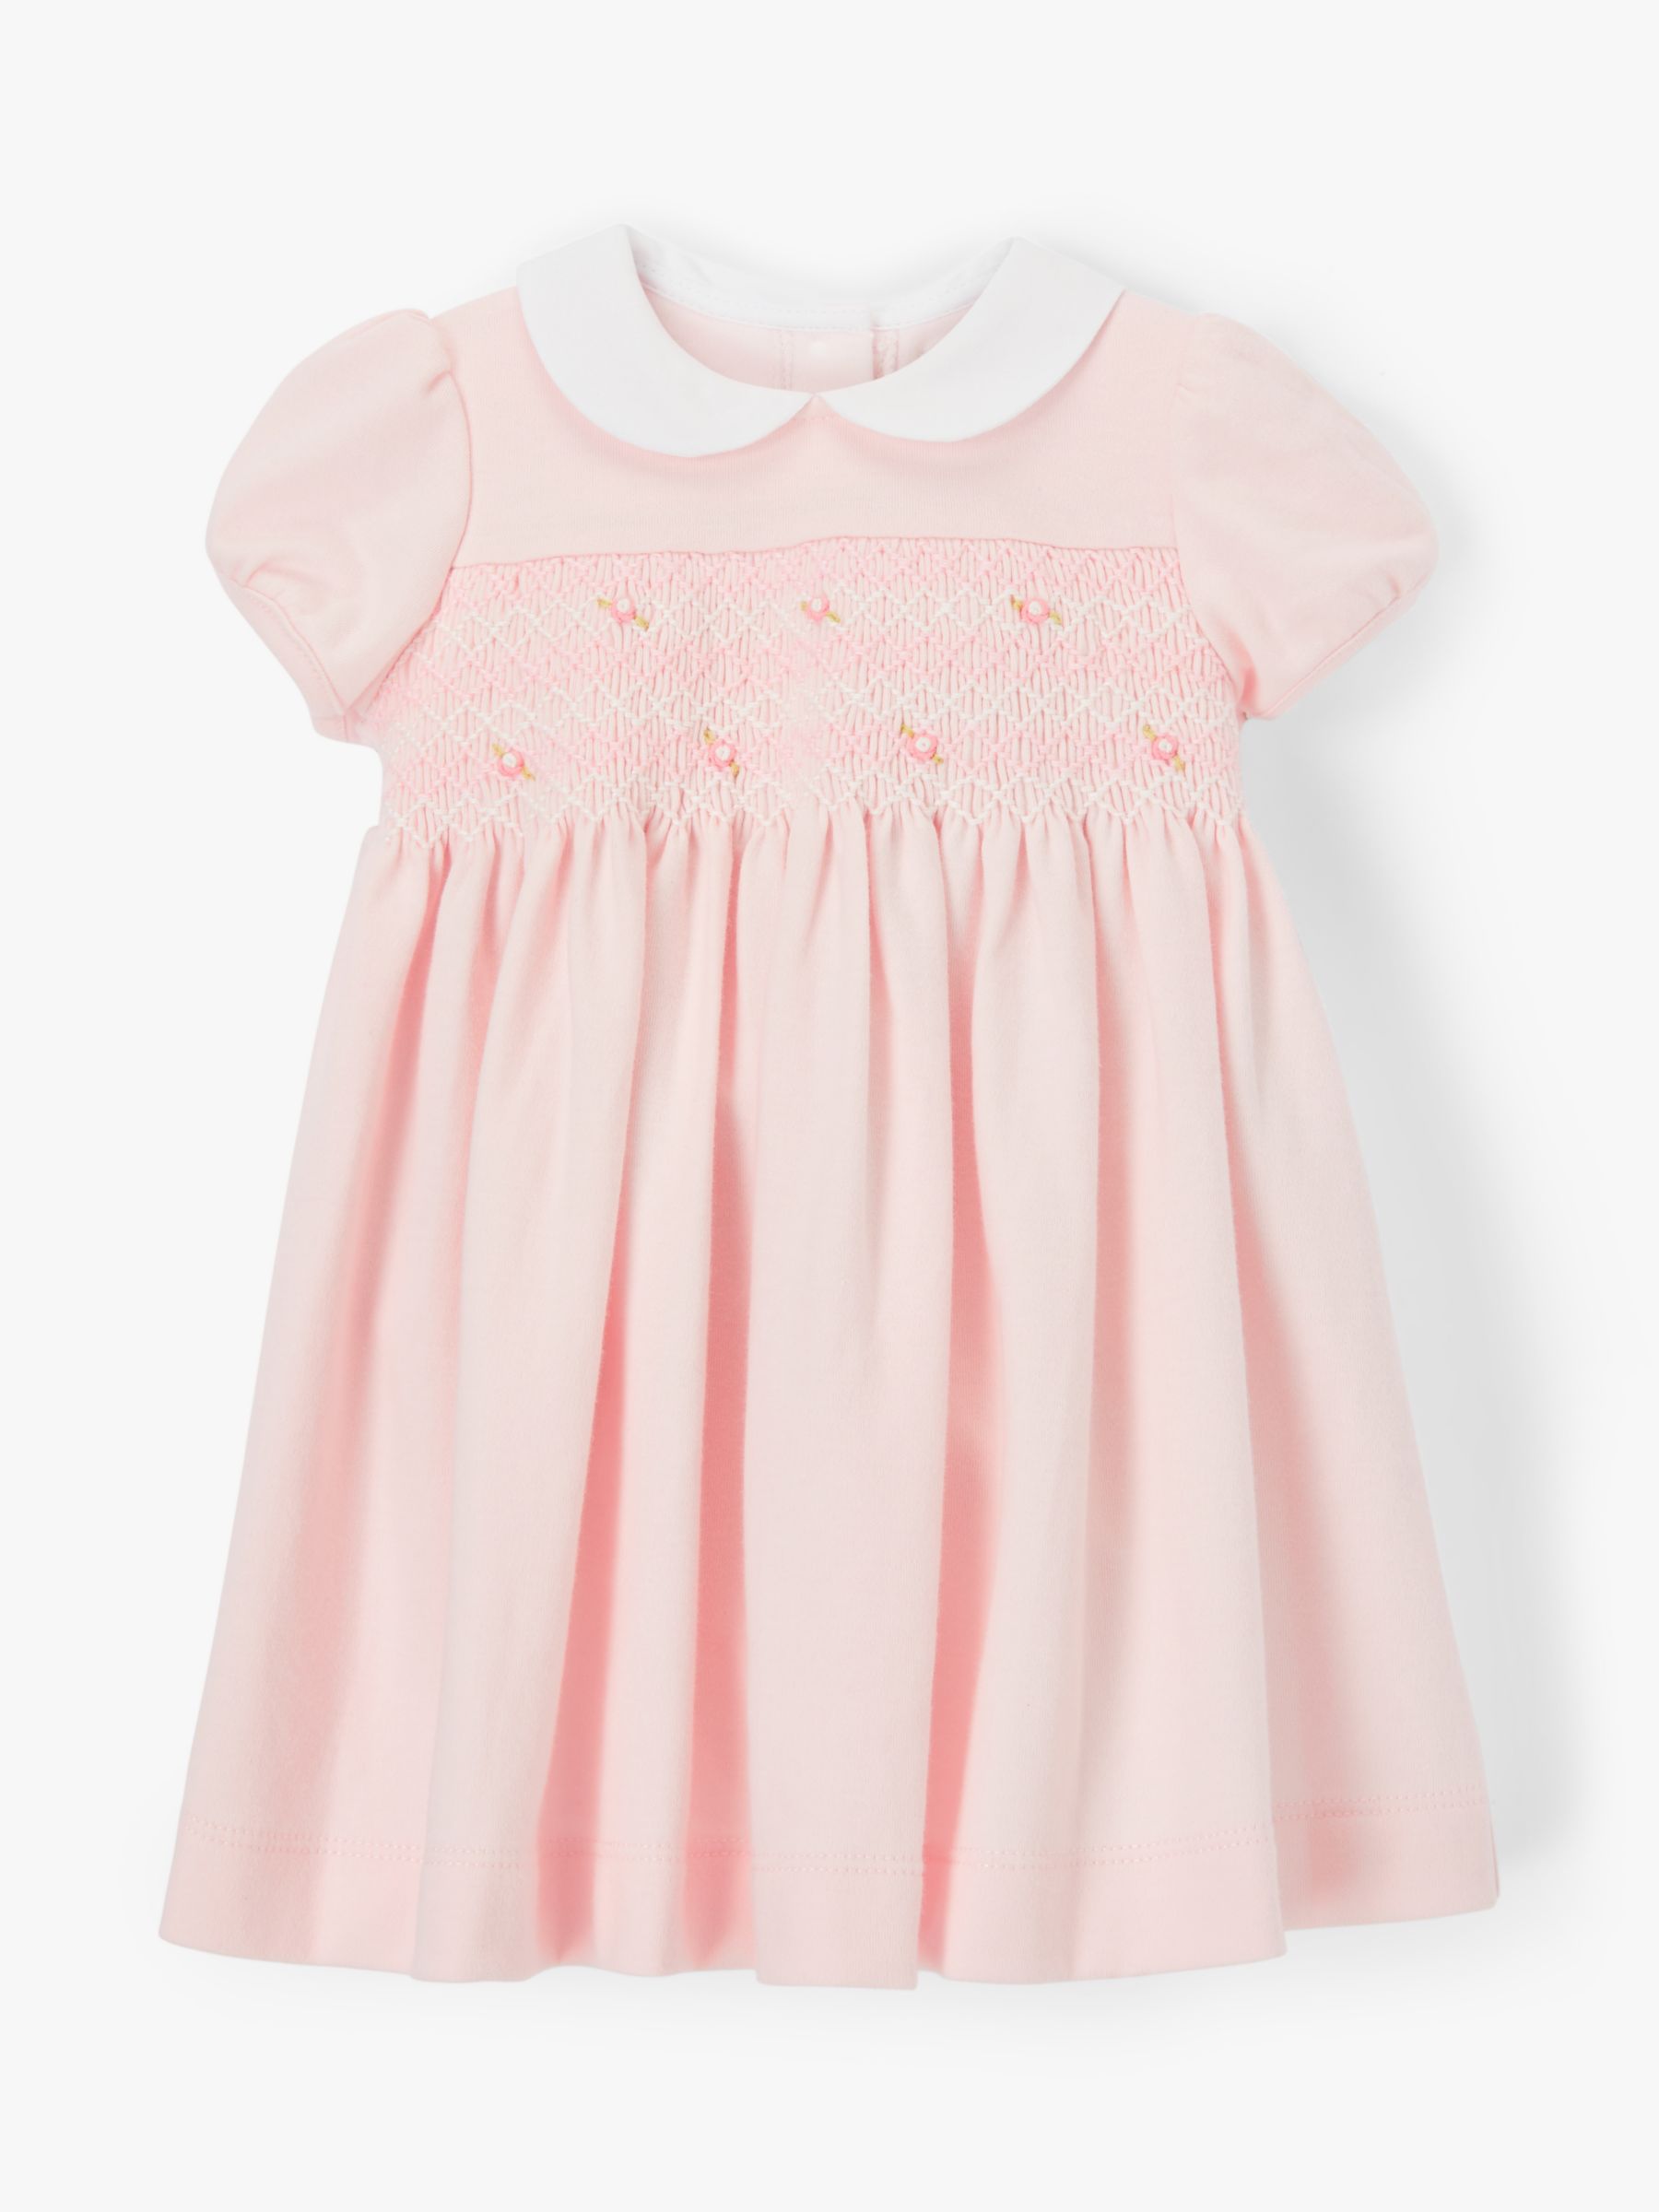 Baby Girl Dresses | John Lewis \u0026 Partners